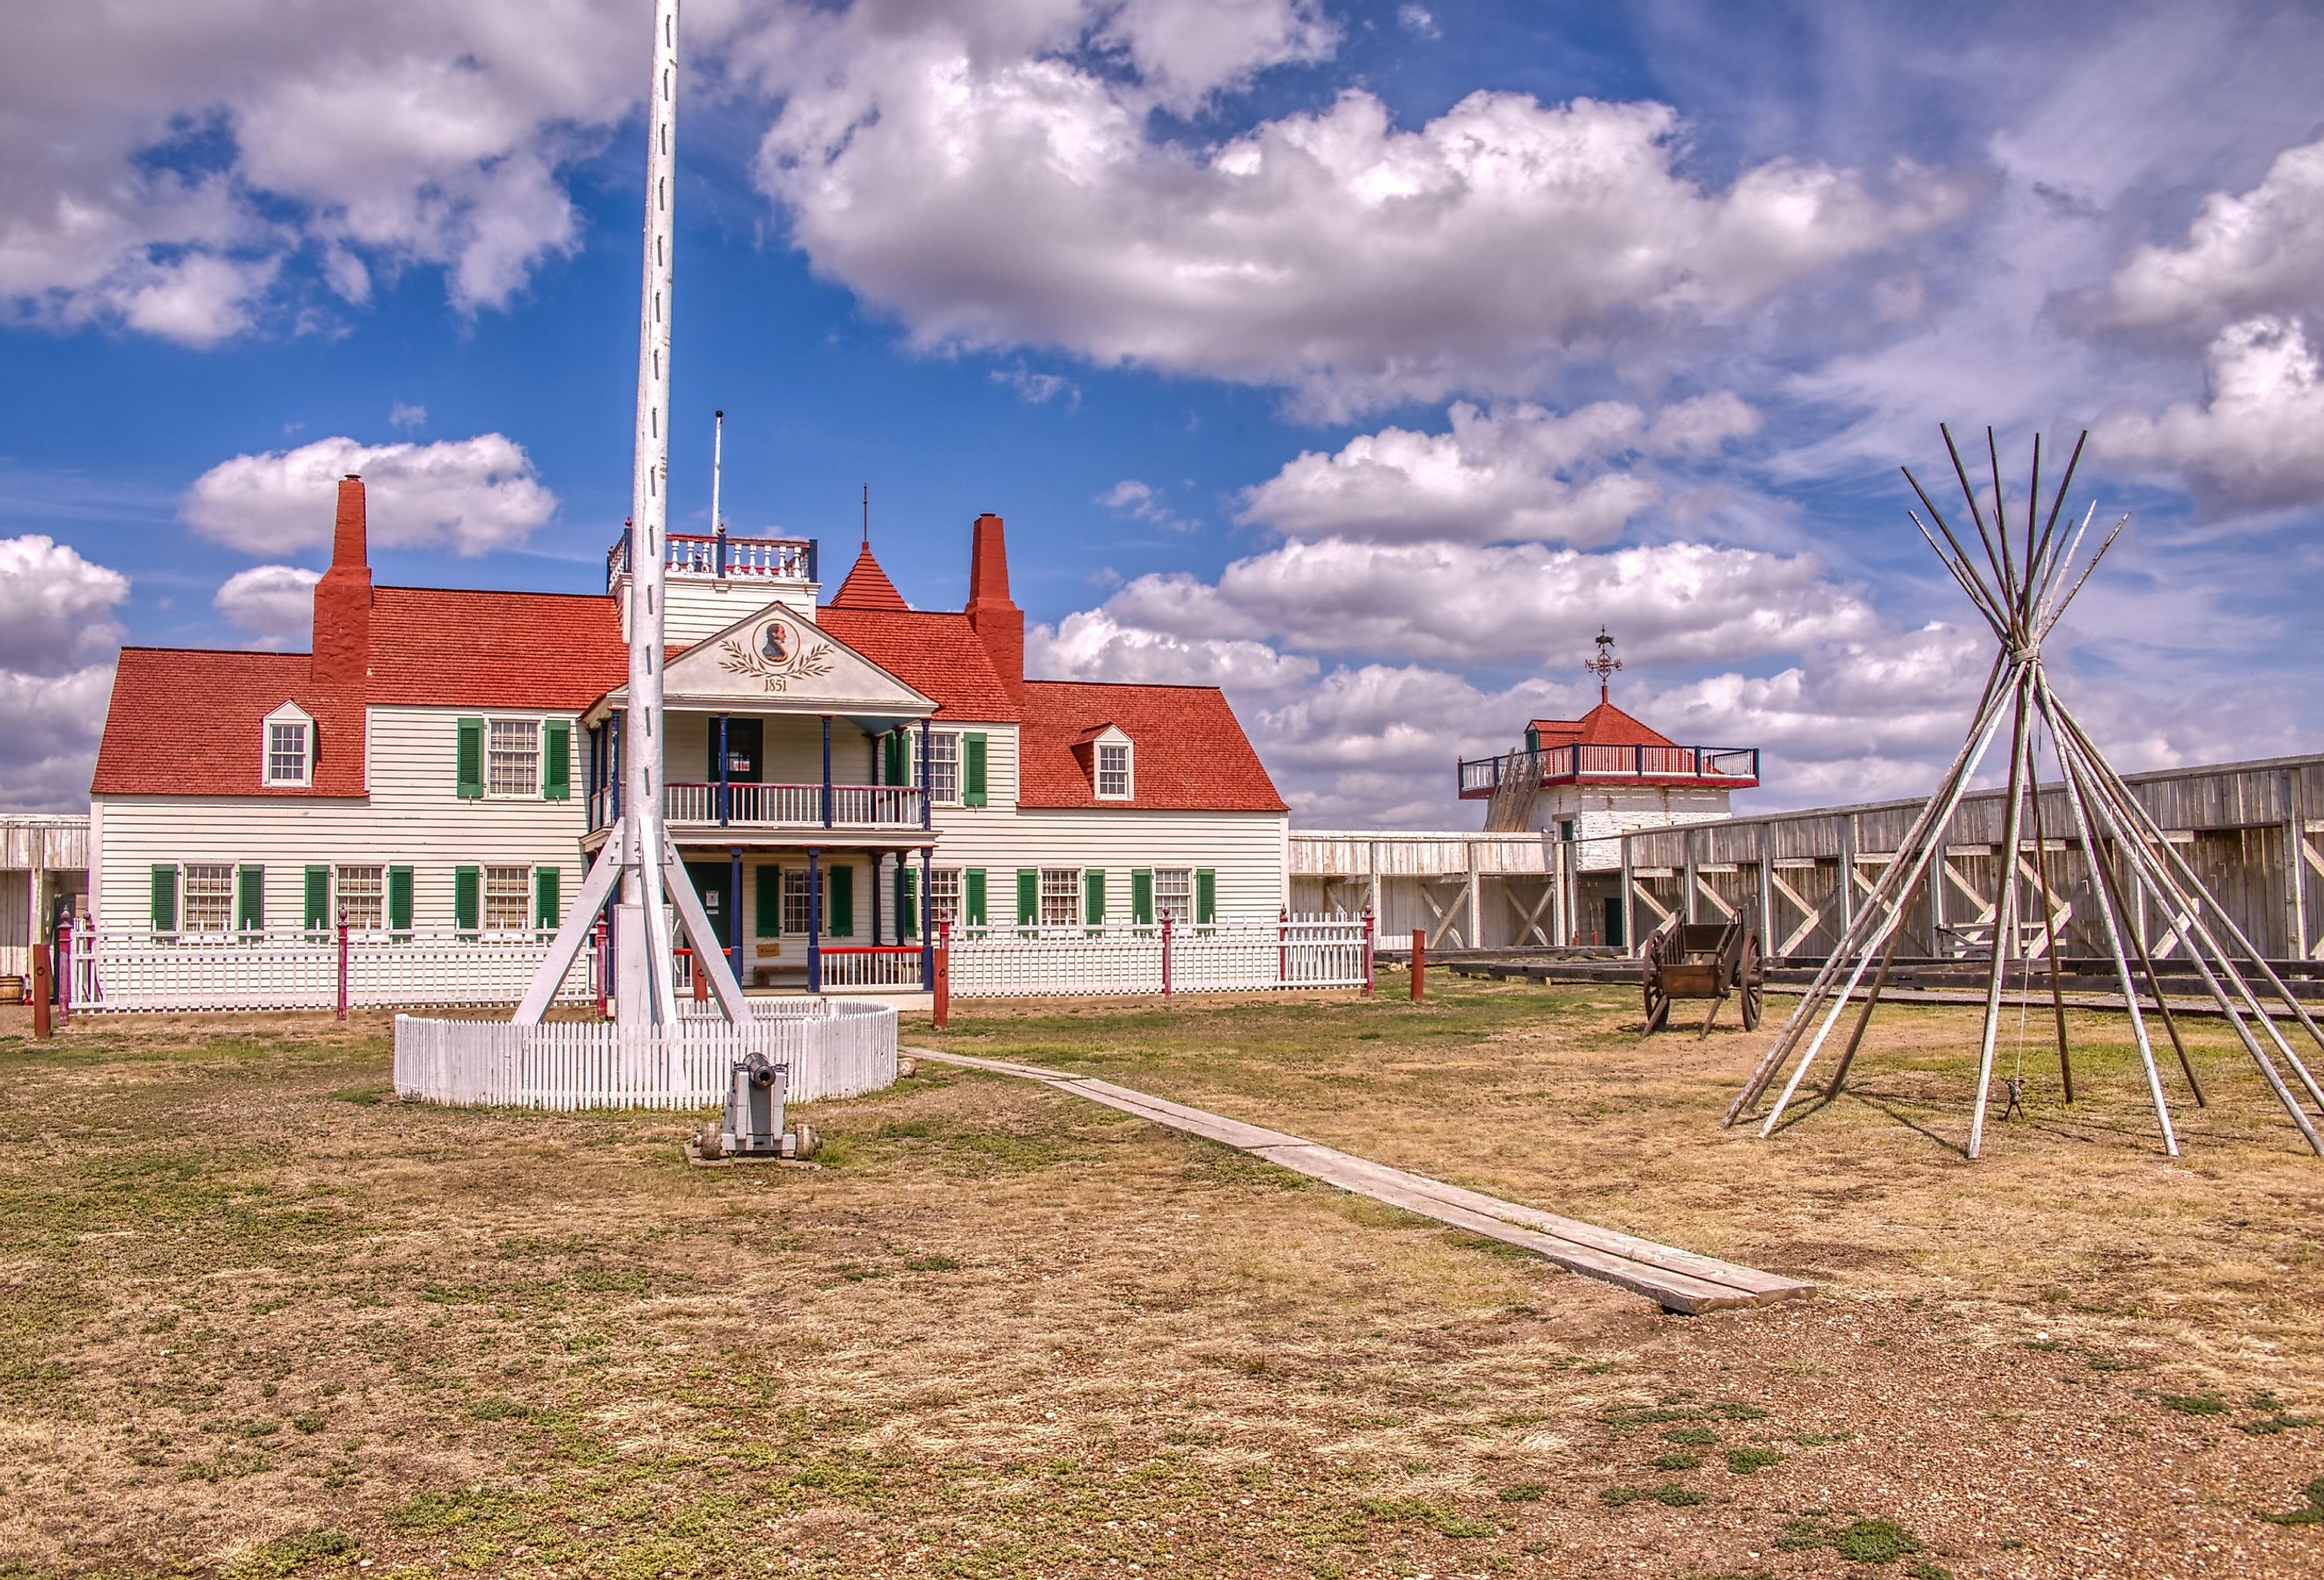 Fort Union Trading Post National Historic Site near Williston, North Dakota.